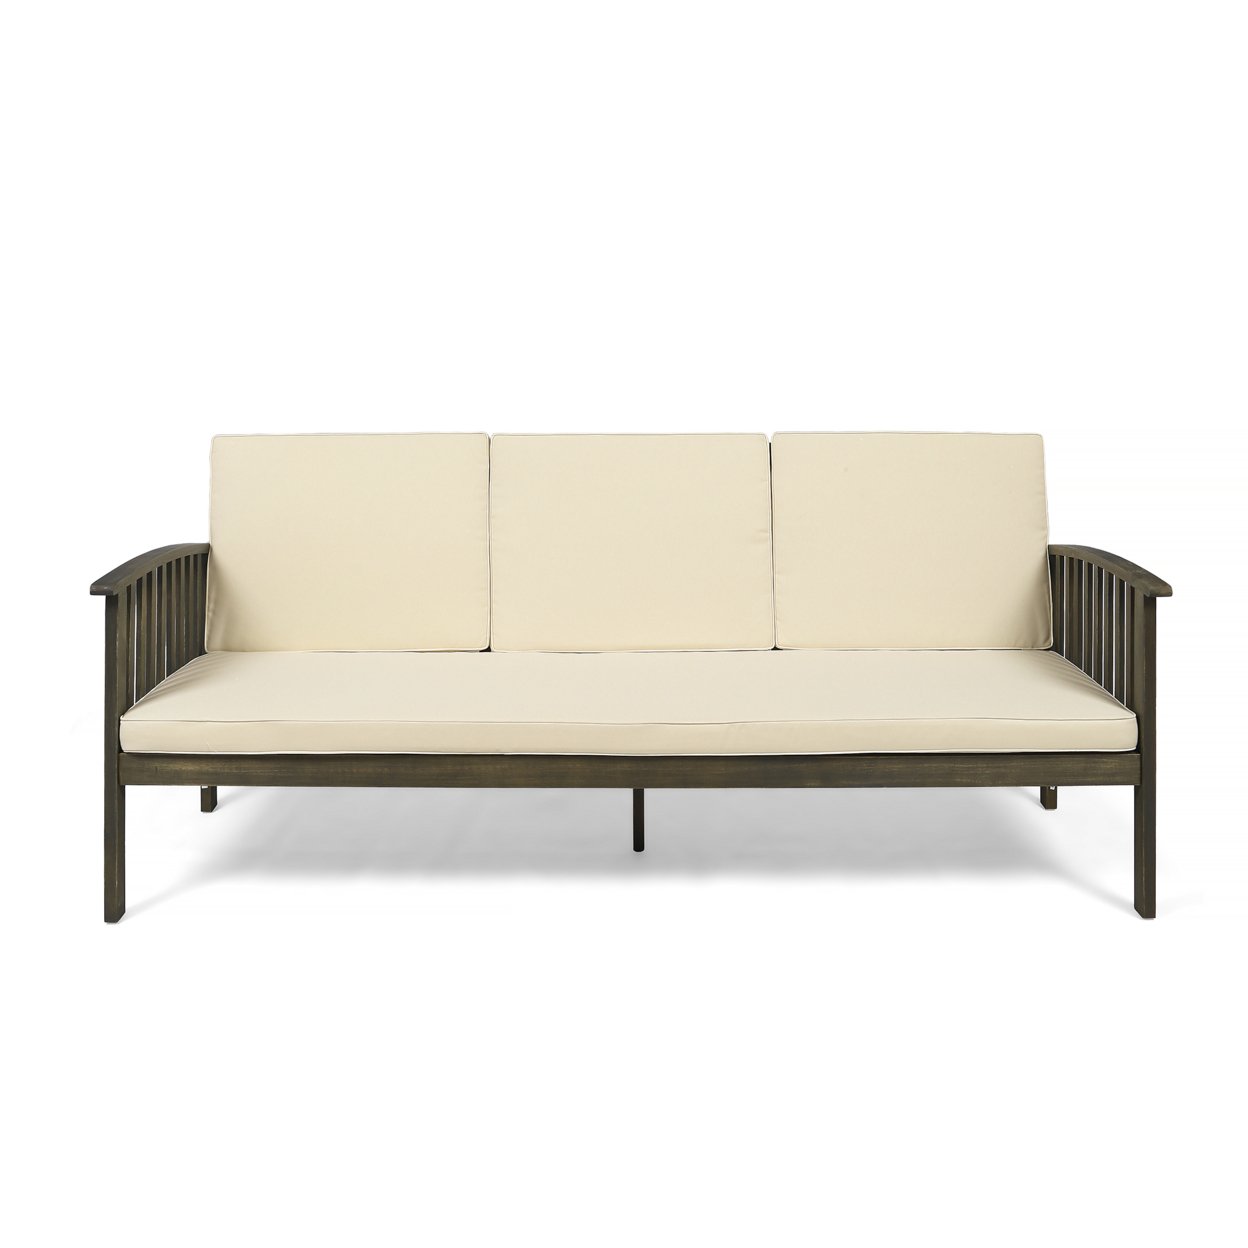 Breenda Outdoor Acacia Wood Sofa With Cushions - Gray